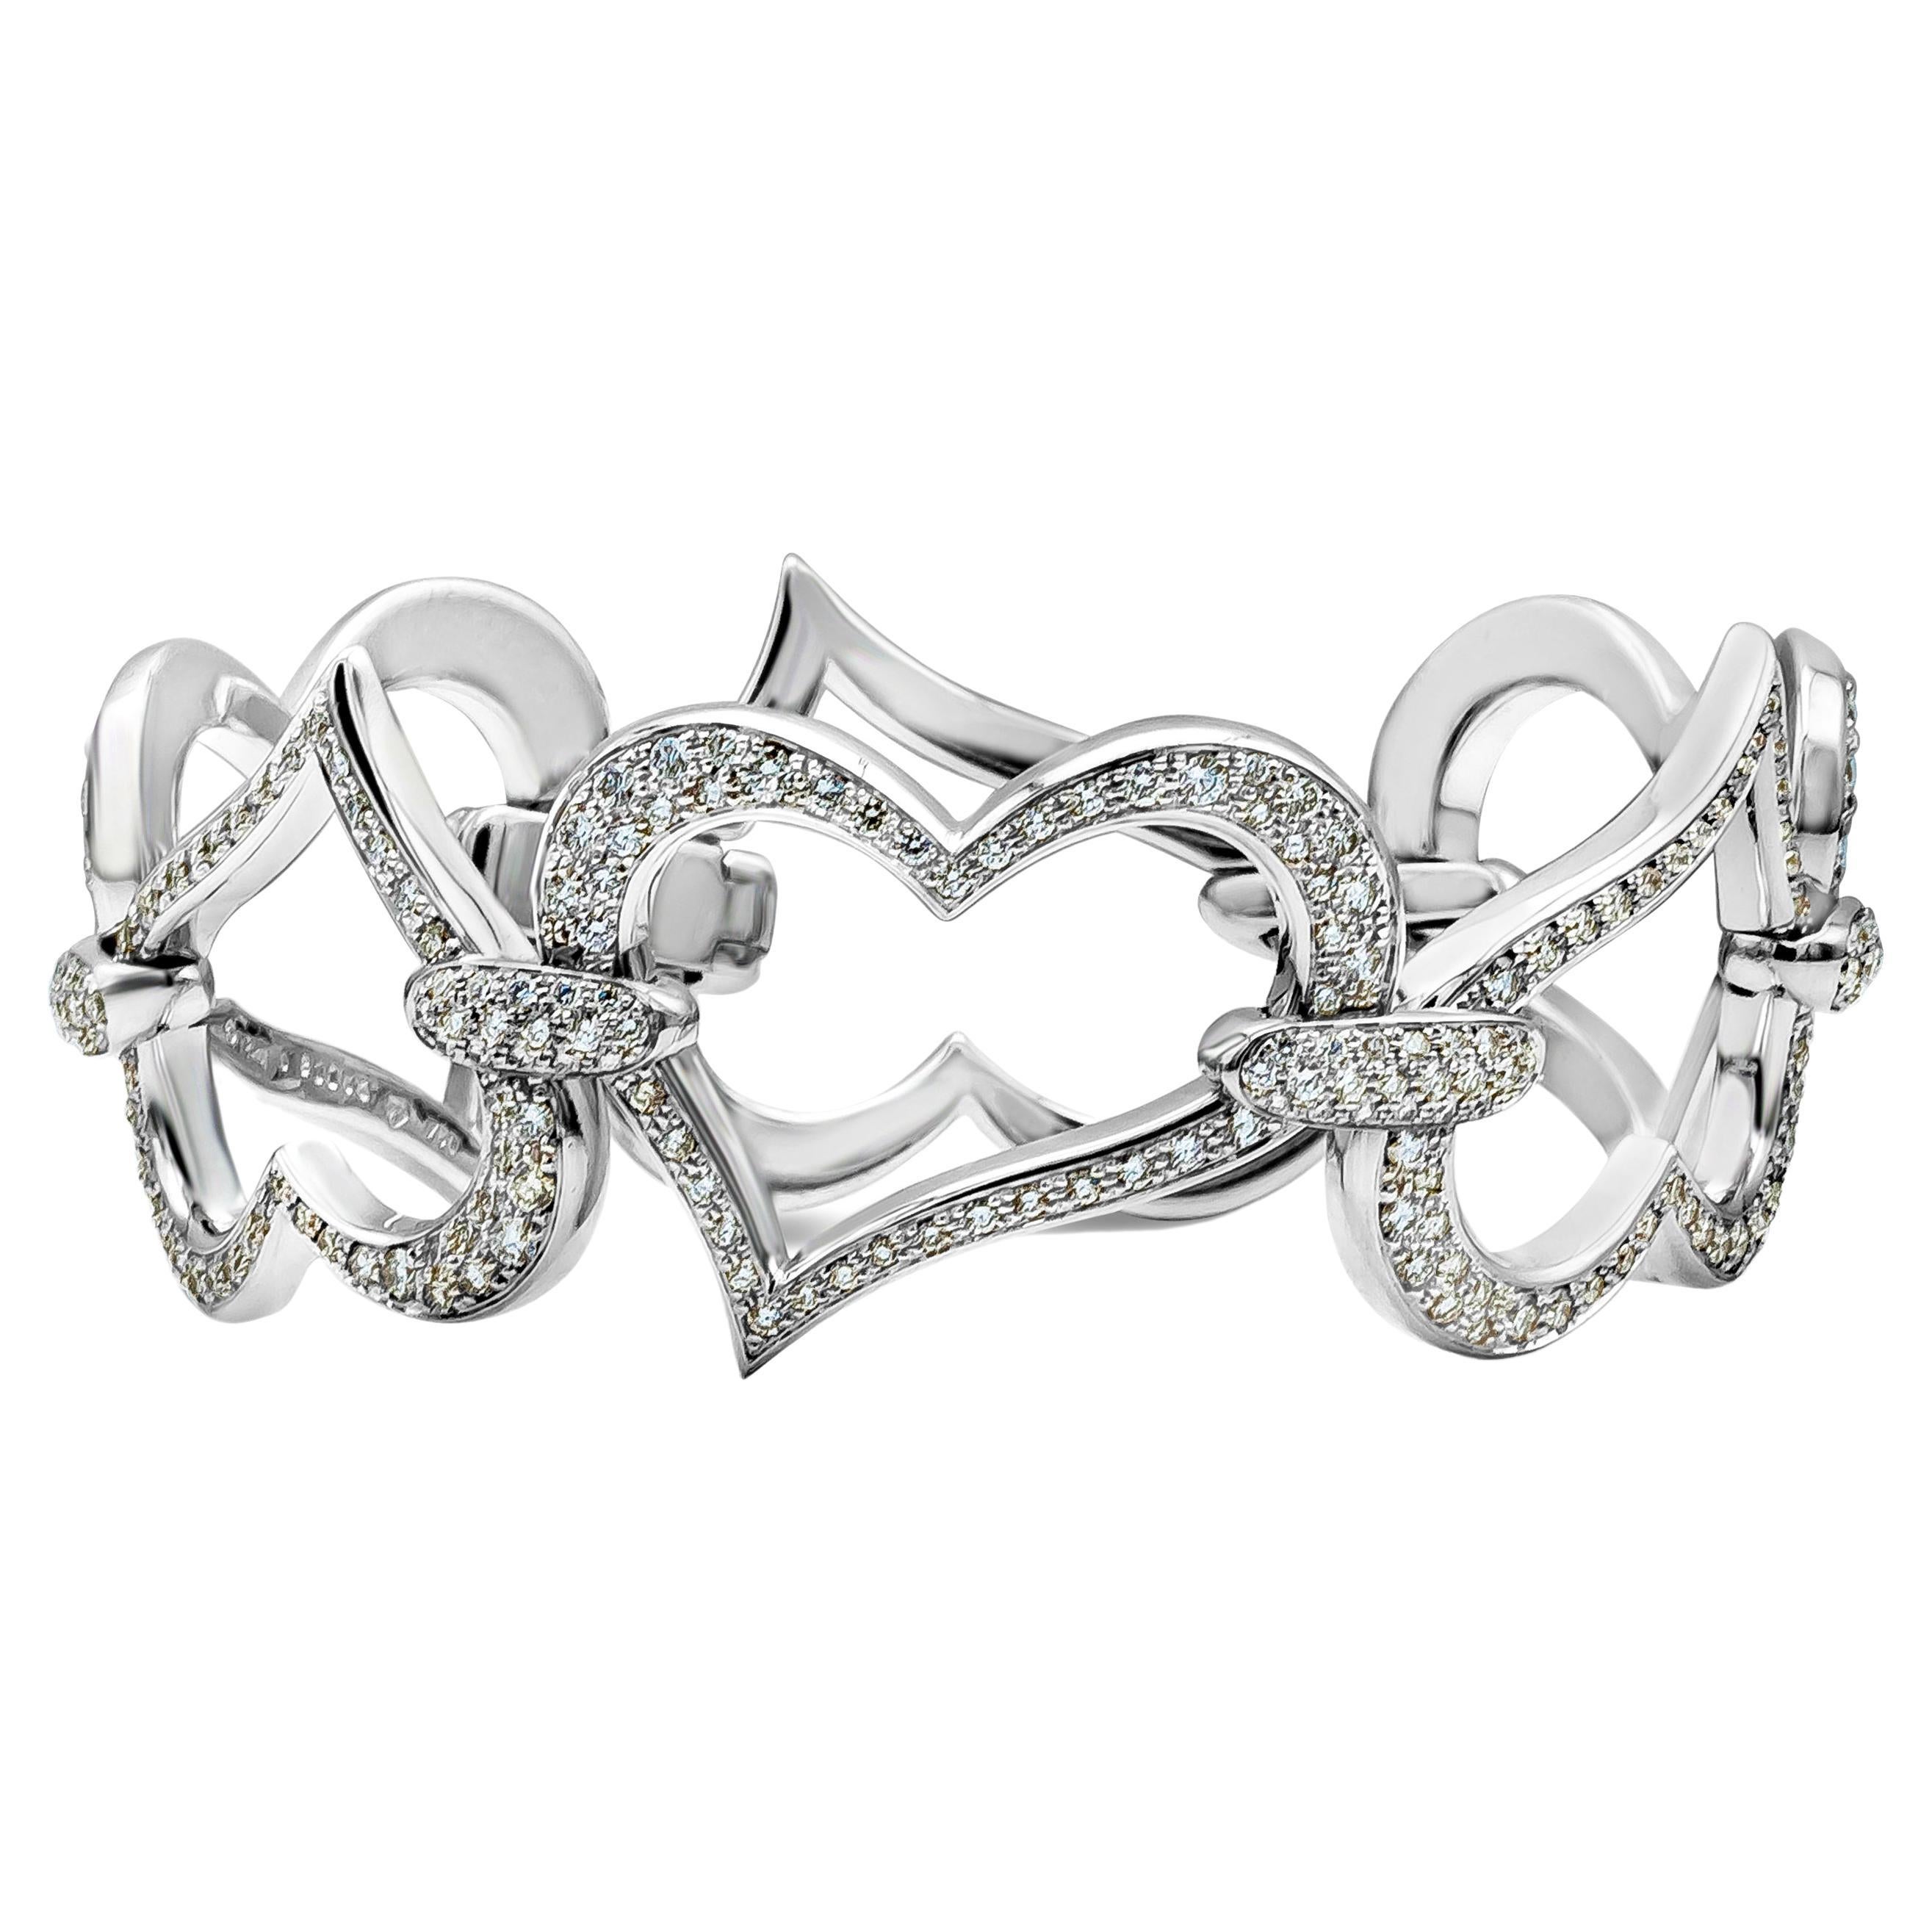 Piaget 4.70 Carat Round Diamond Link Heart Bracelet in White Gold